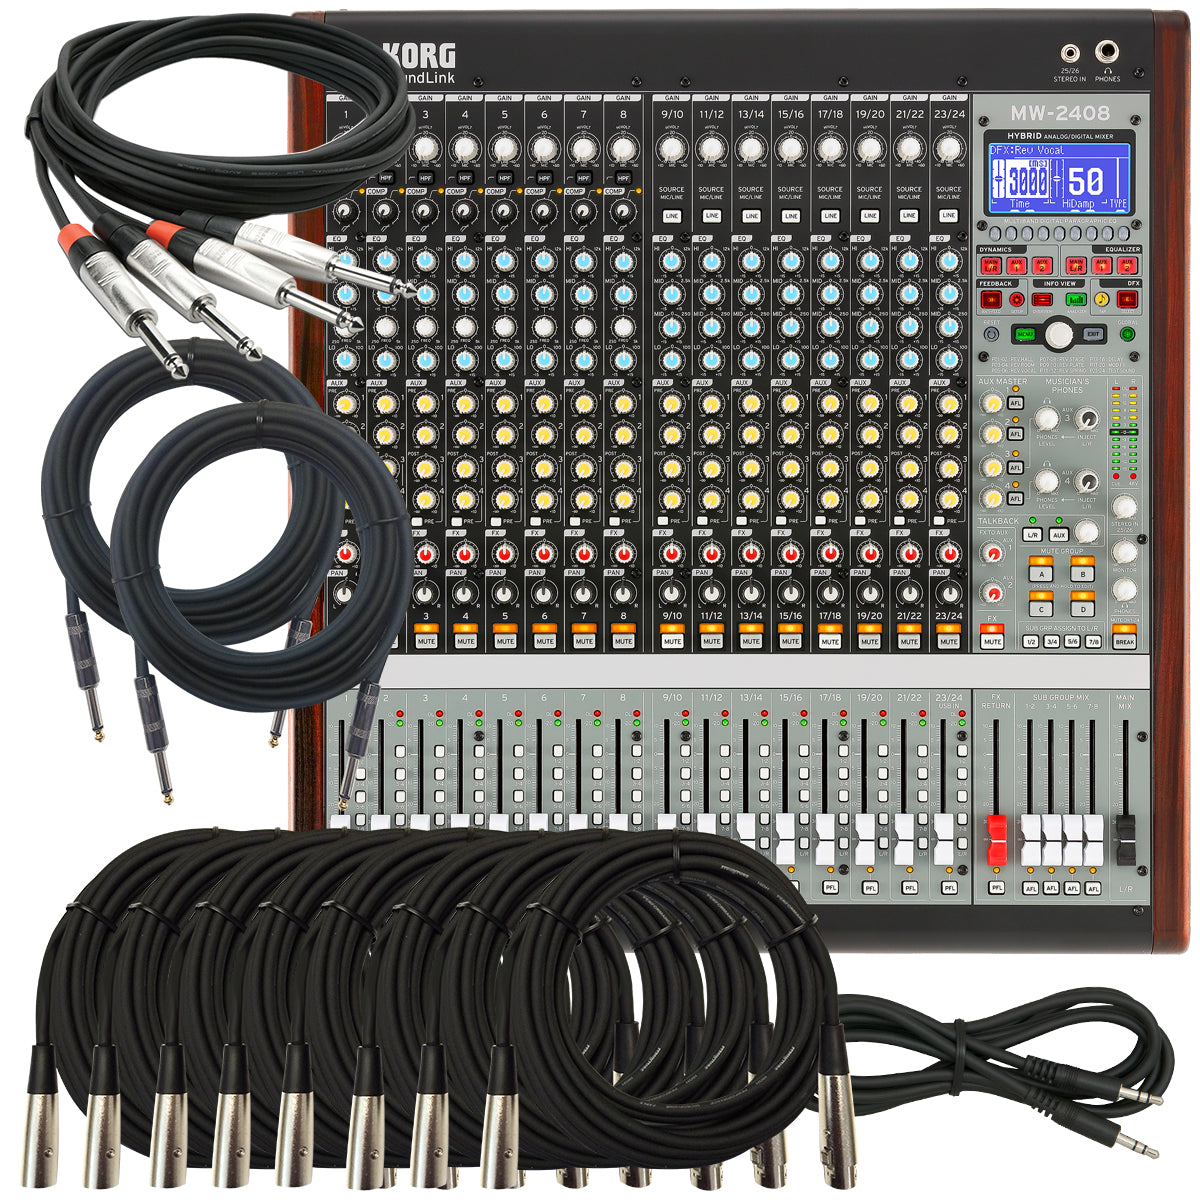 Korg Soundlink MW-2408 24-channel Hybrid Mixer CABLE KIT